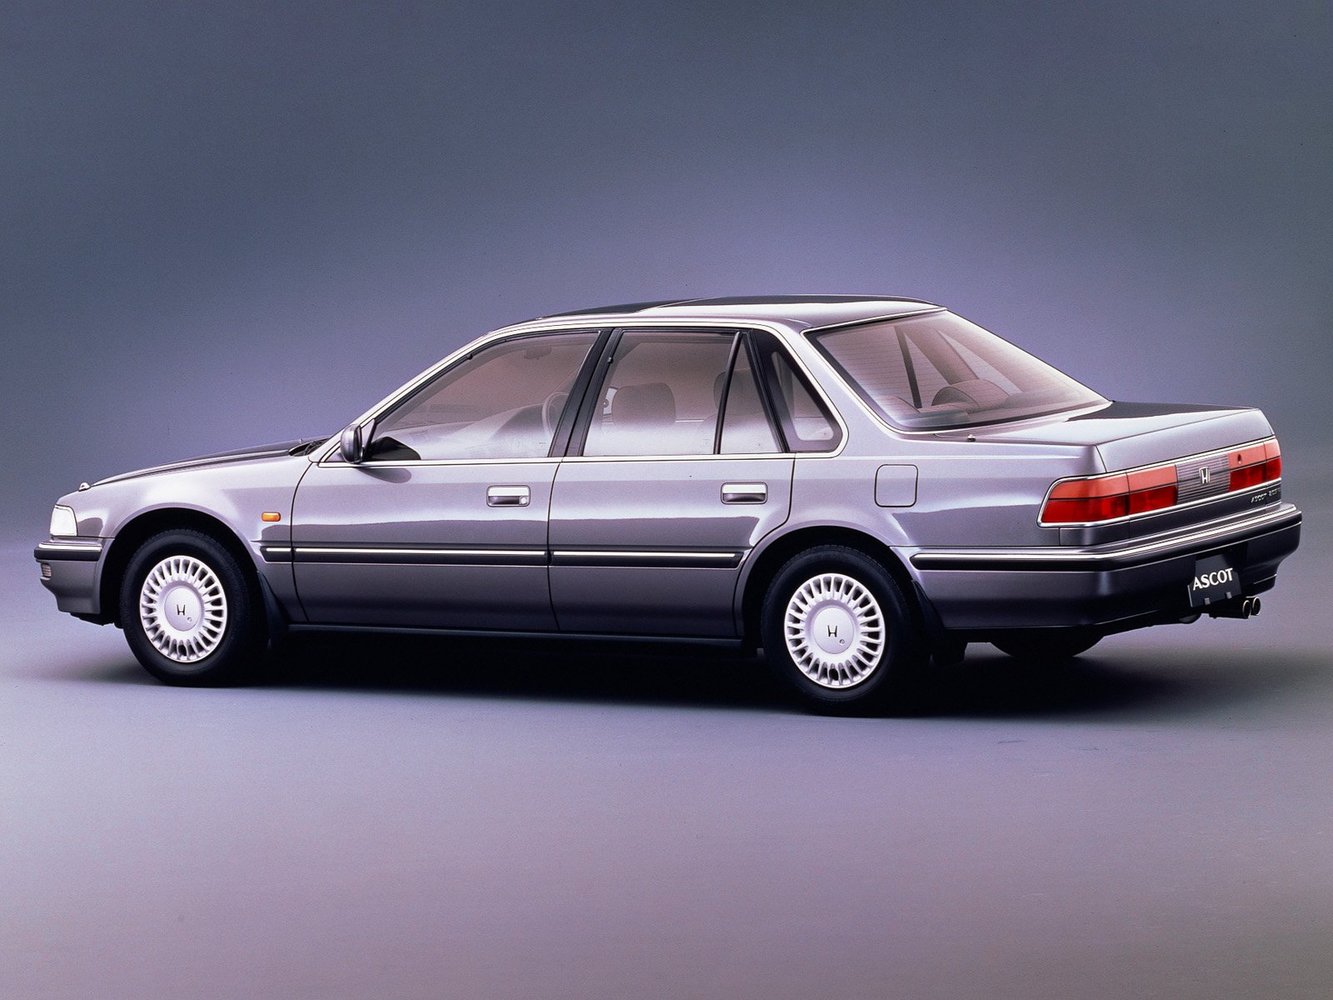 седан Honda Ascot 1989 - 1993г выпуска модификация 2.0 AT (135 л.с.)